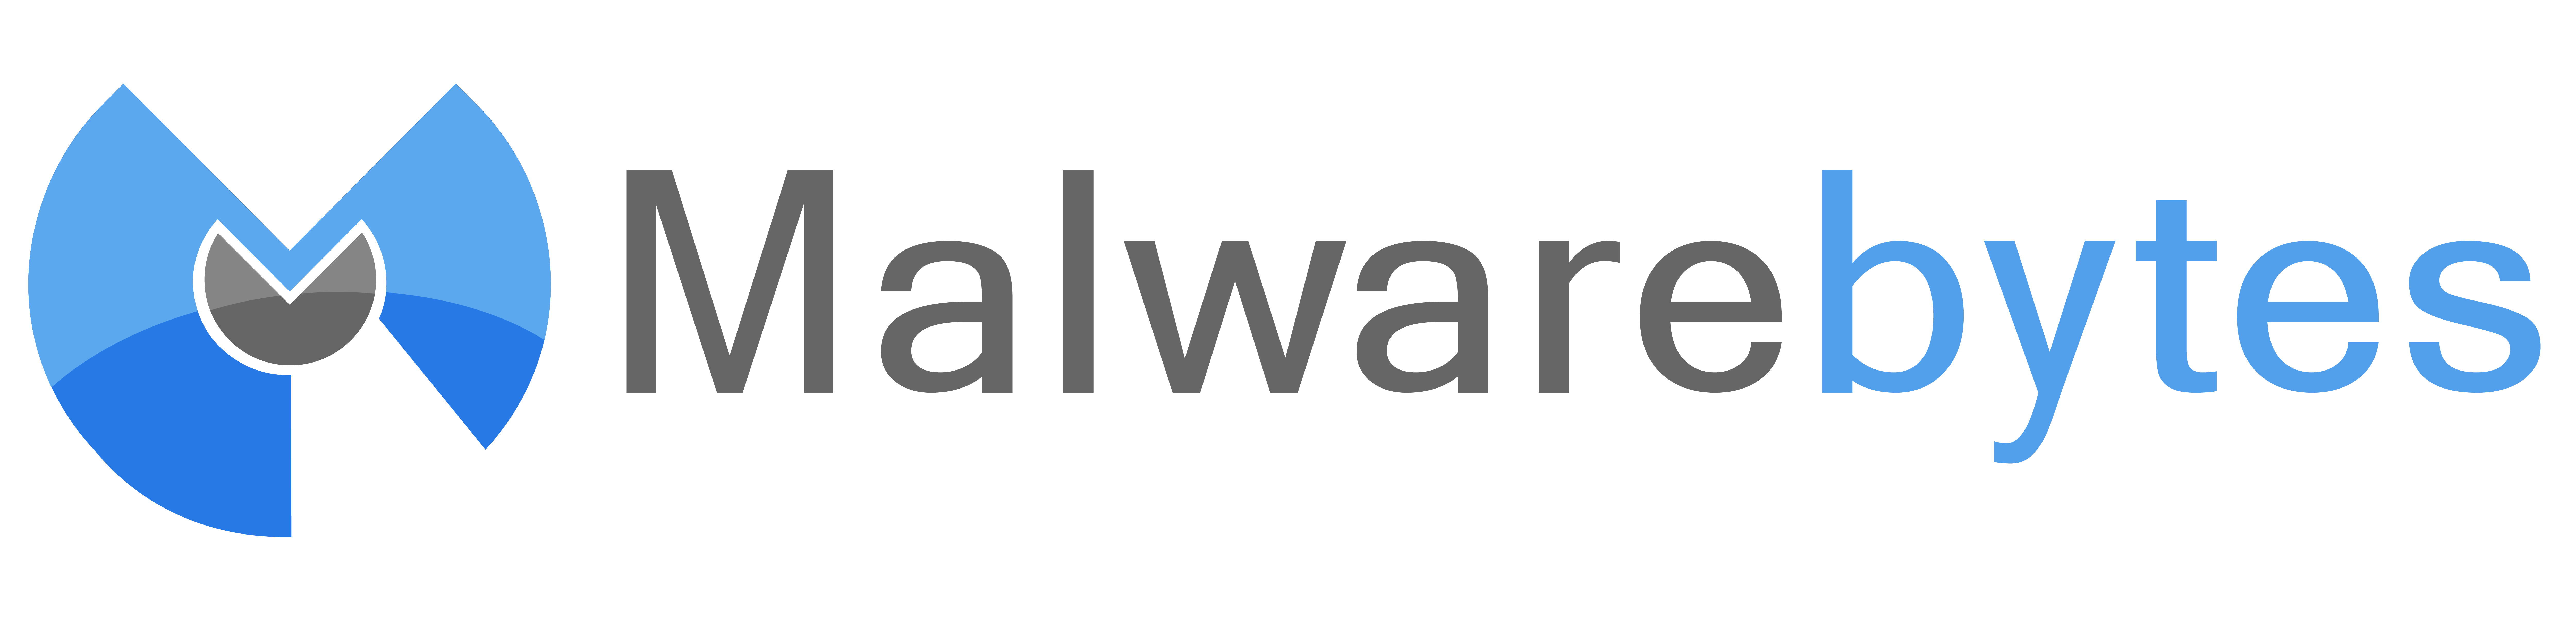 free download for malwarebytes anti malware cnet